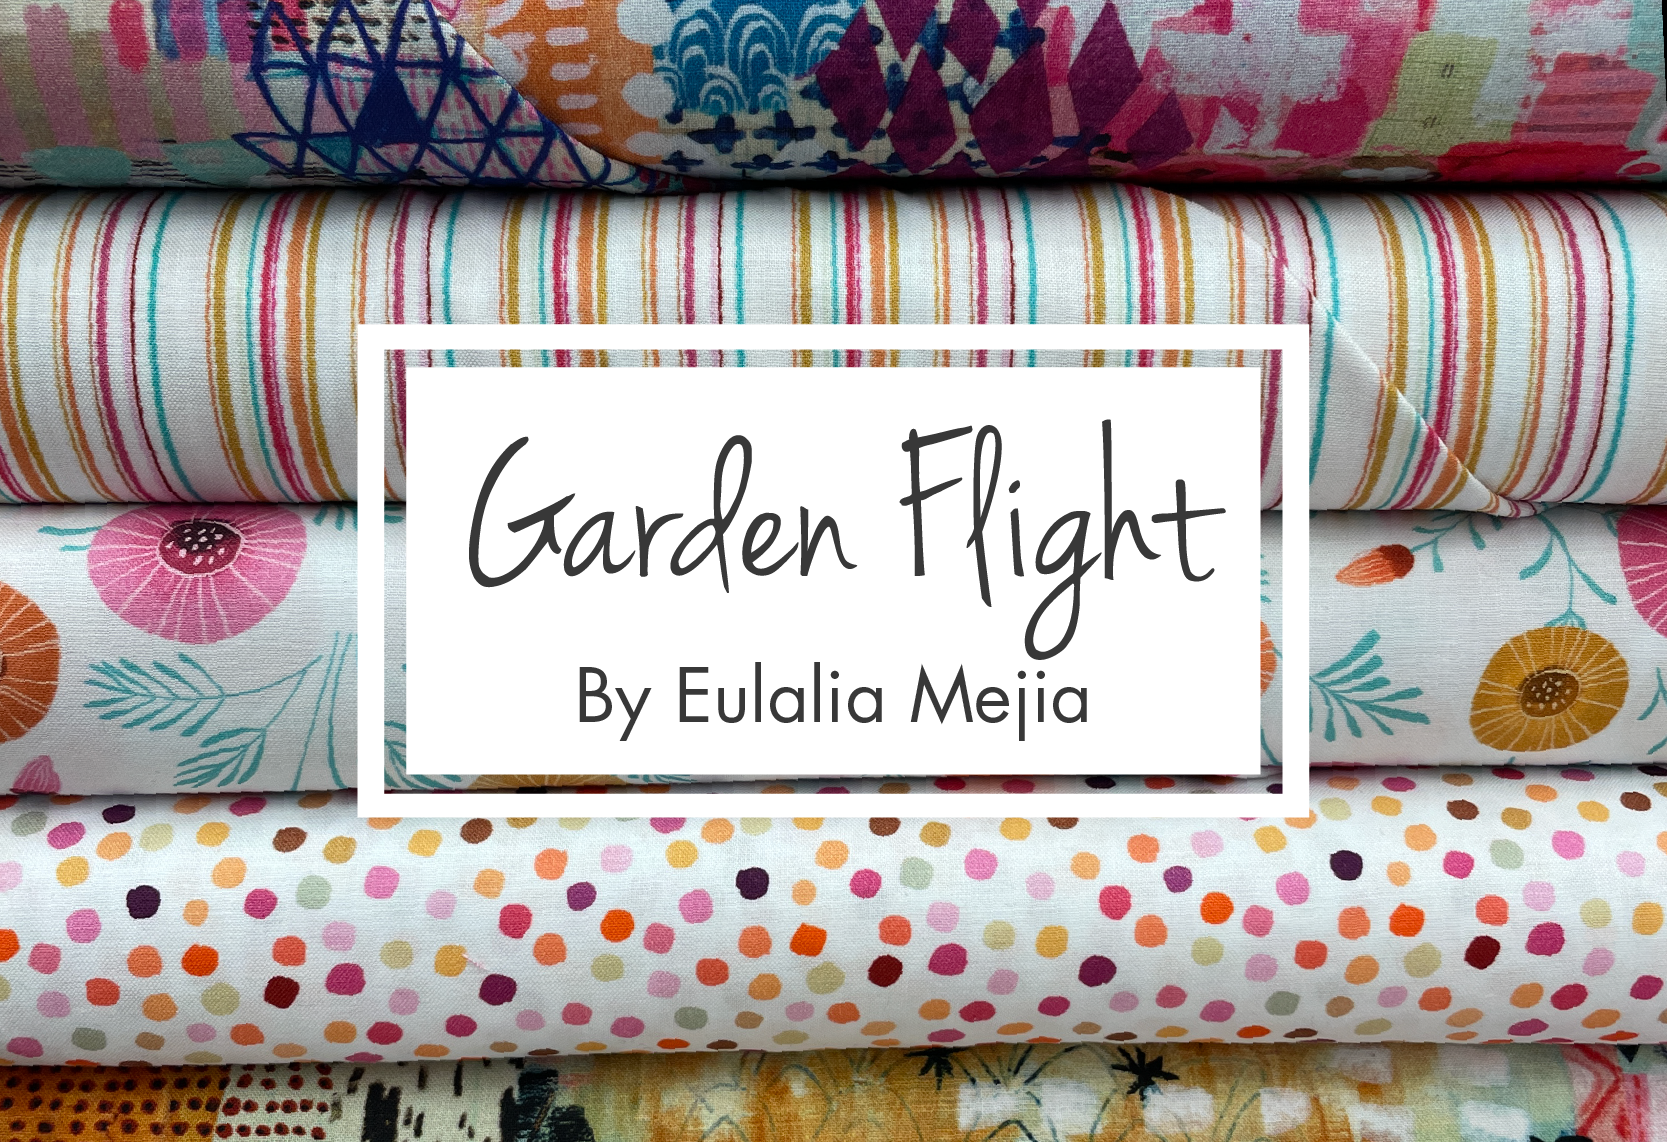 Garden Flight By Eulalia Mejia